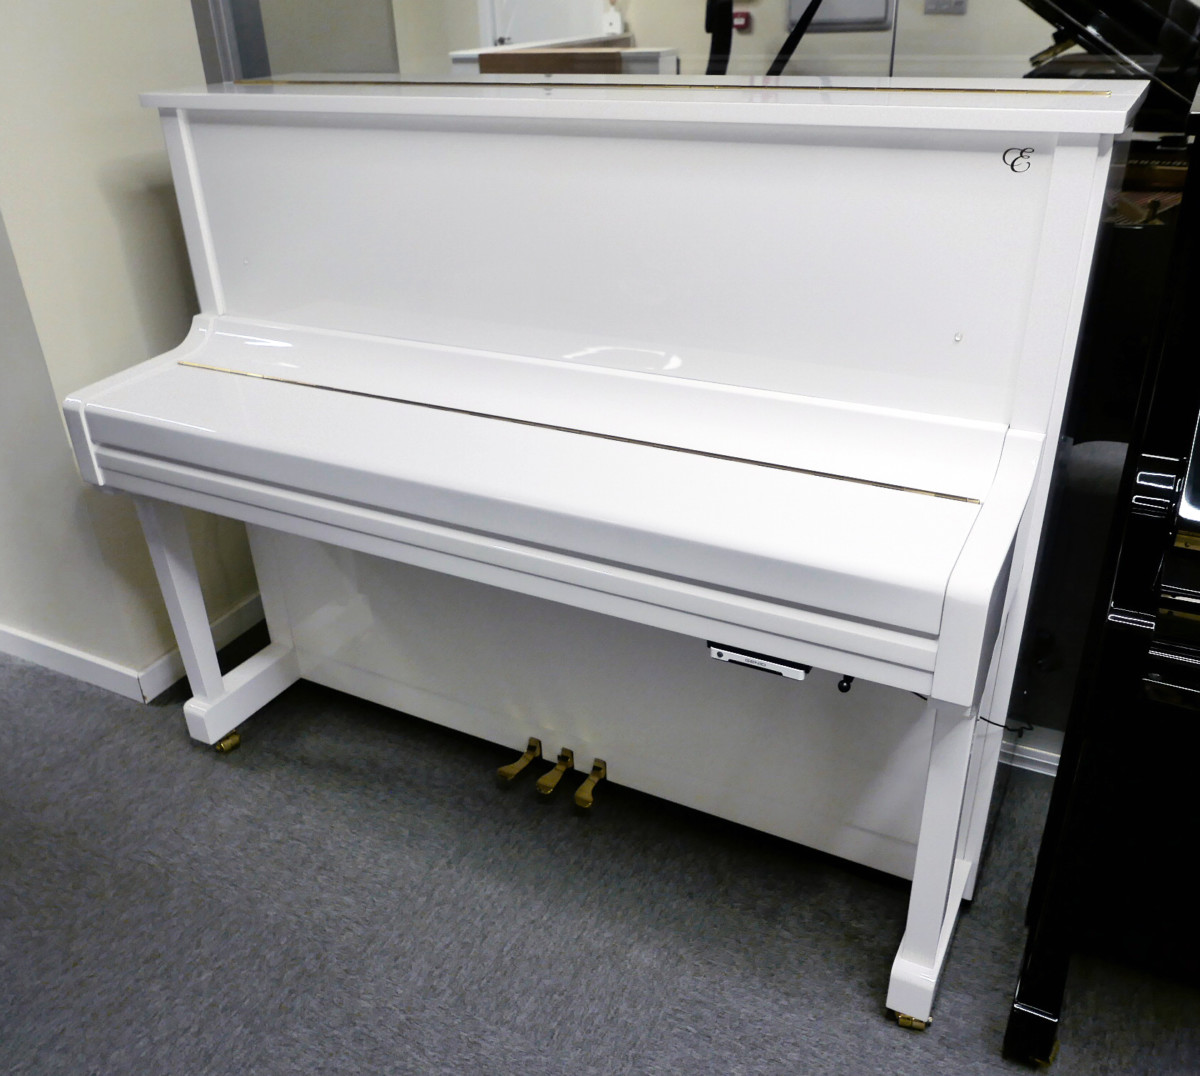 piano vertical Essex EUP123 silent blanco #175887 outlet vista general tapa cerrada